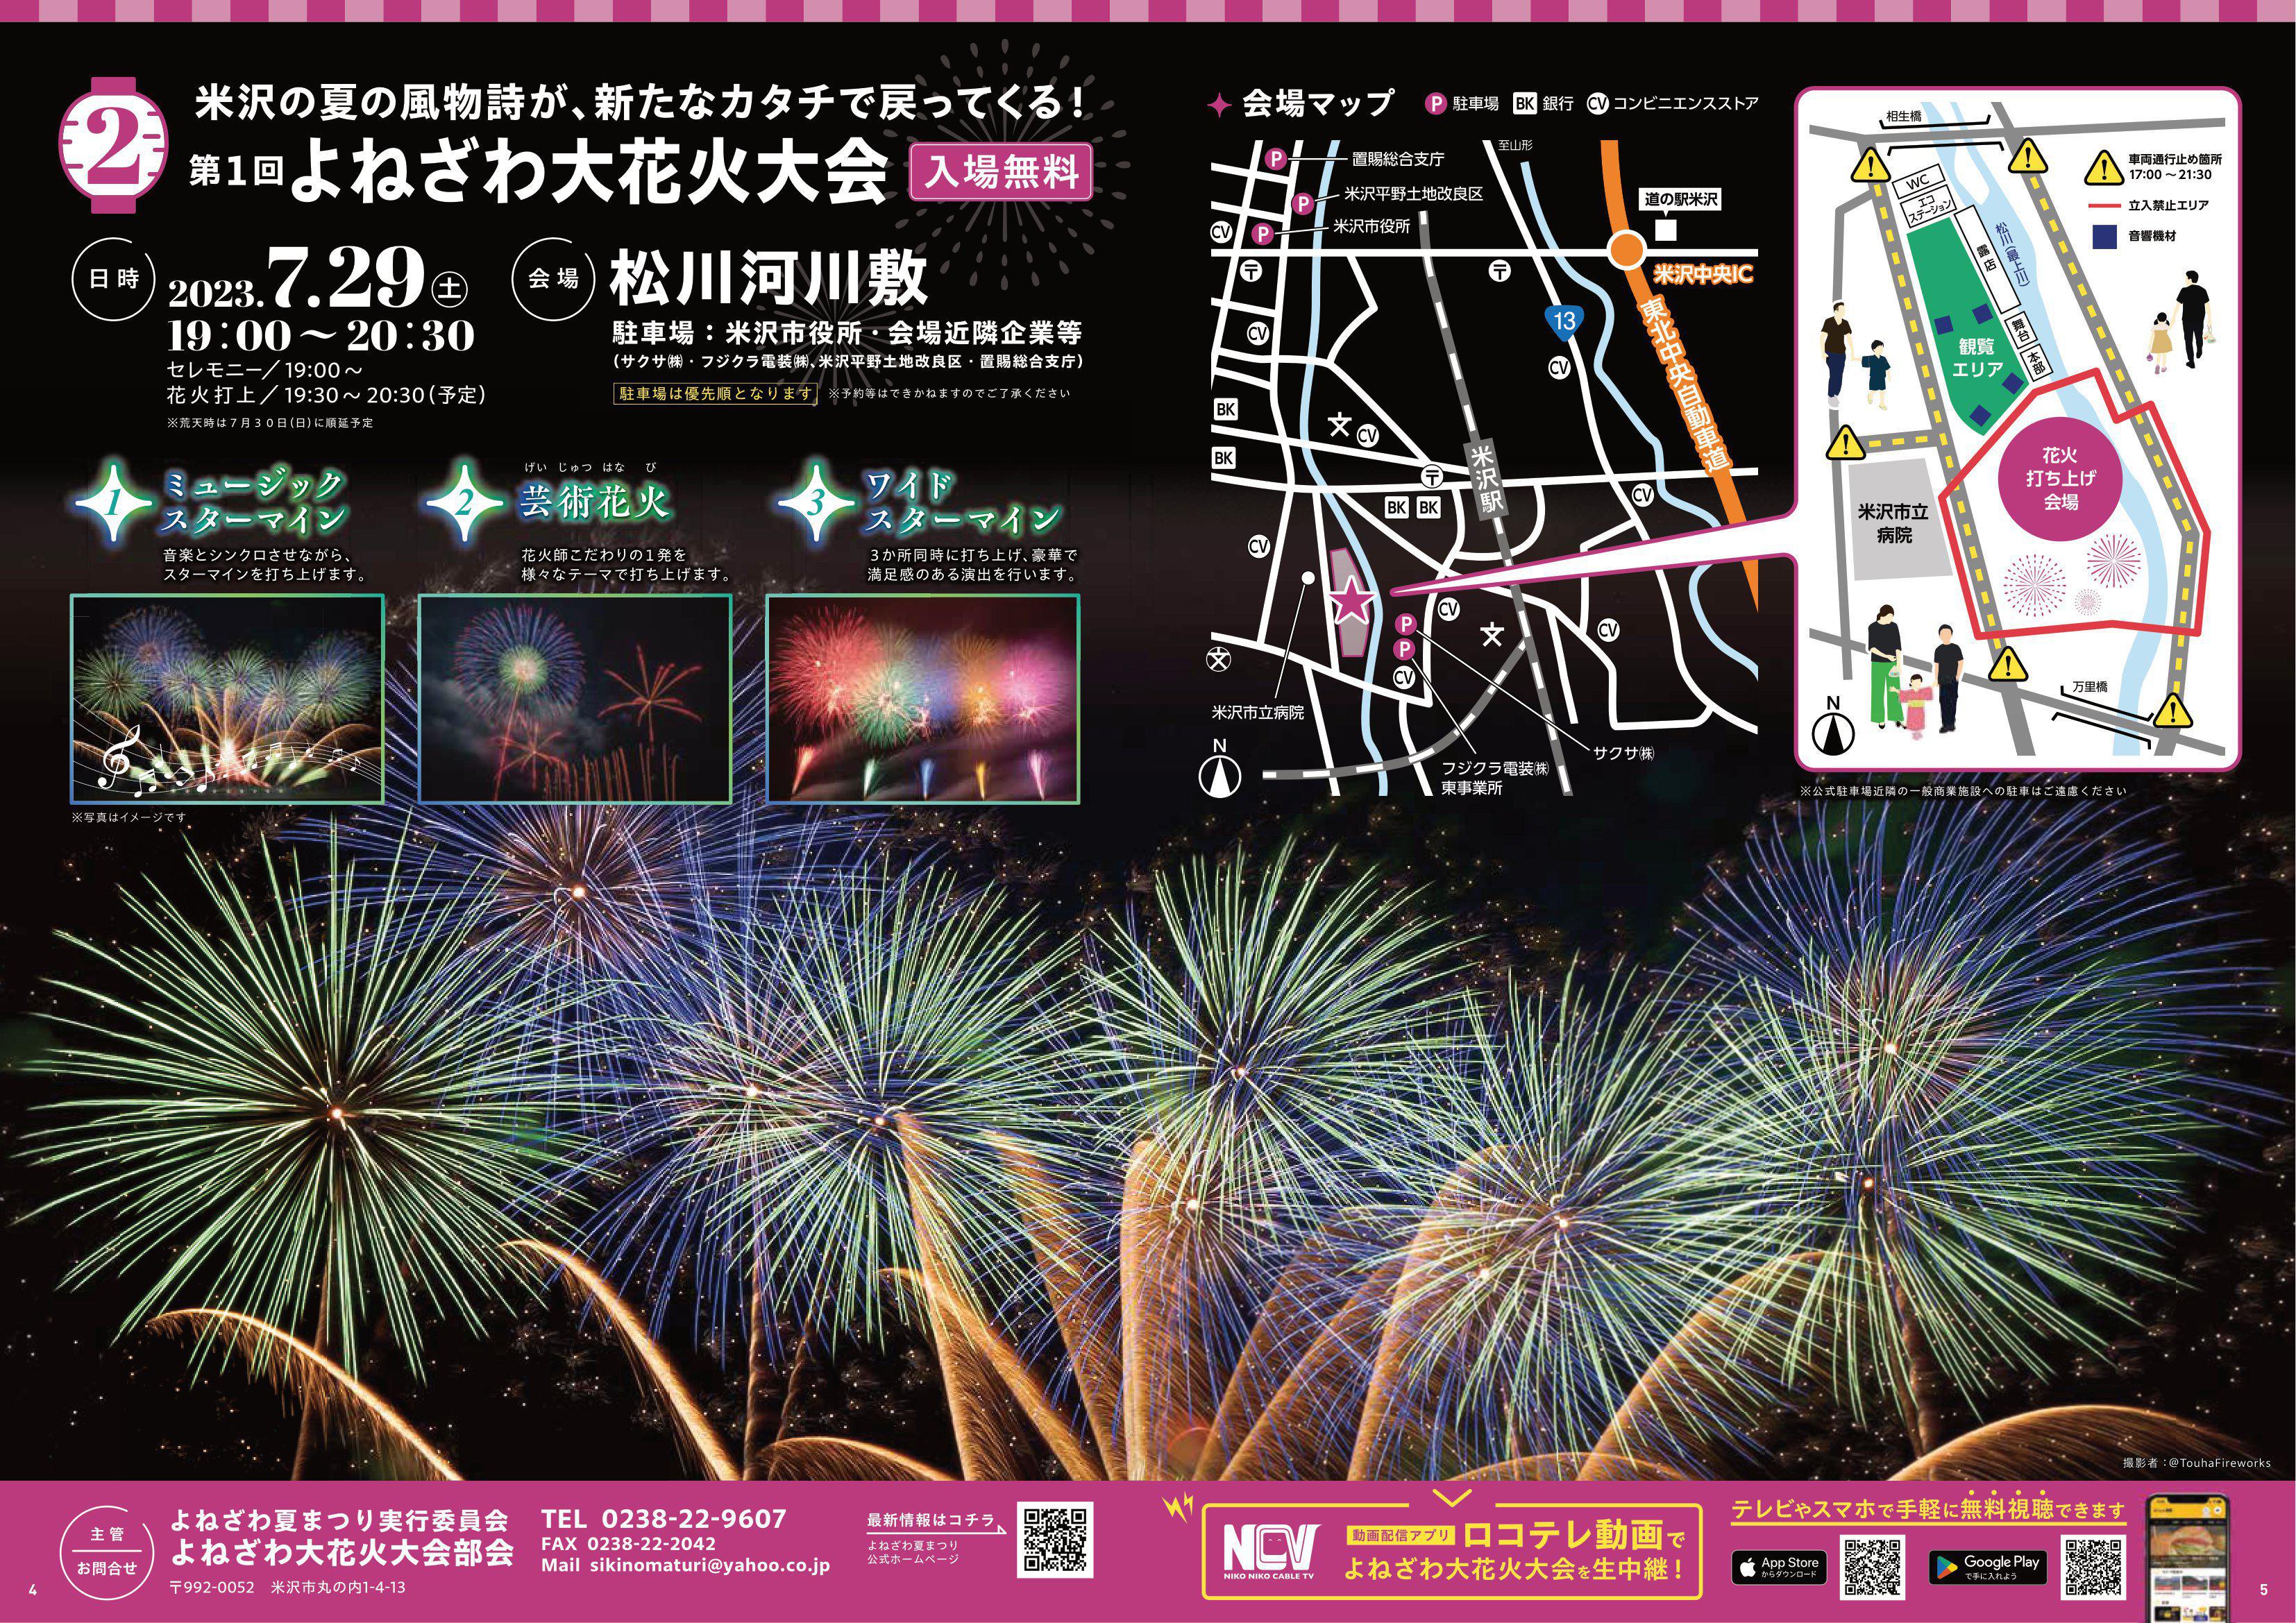 Fireworks in the Yonezawa Summer!